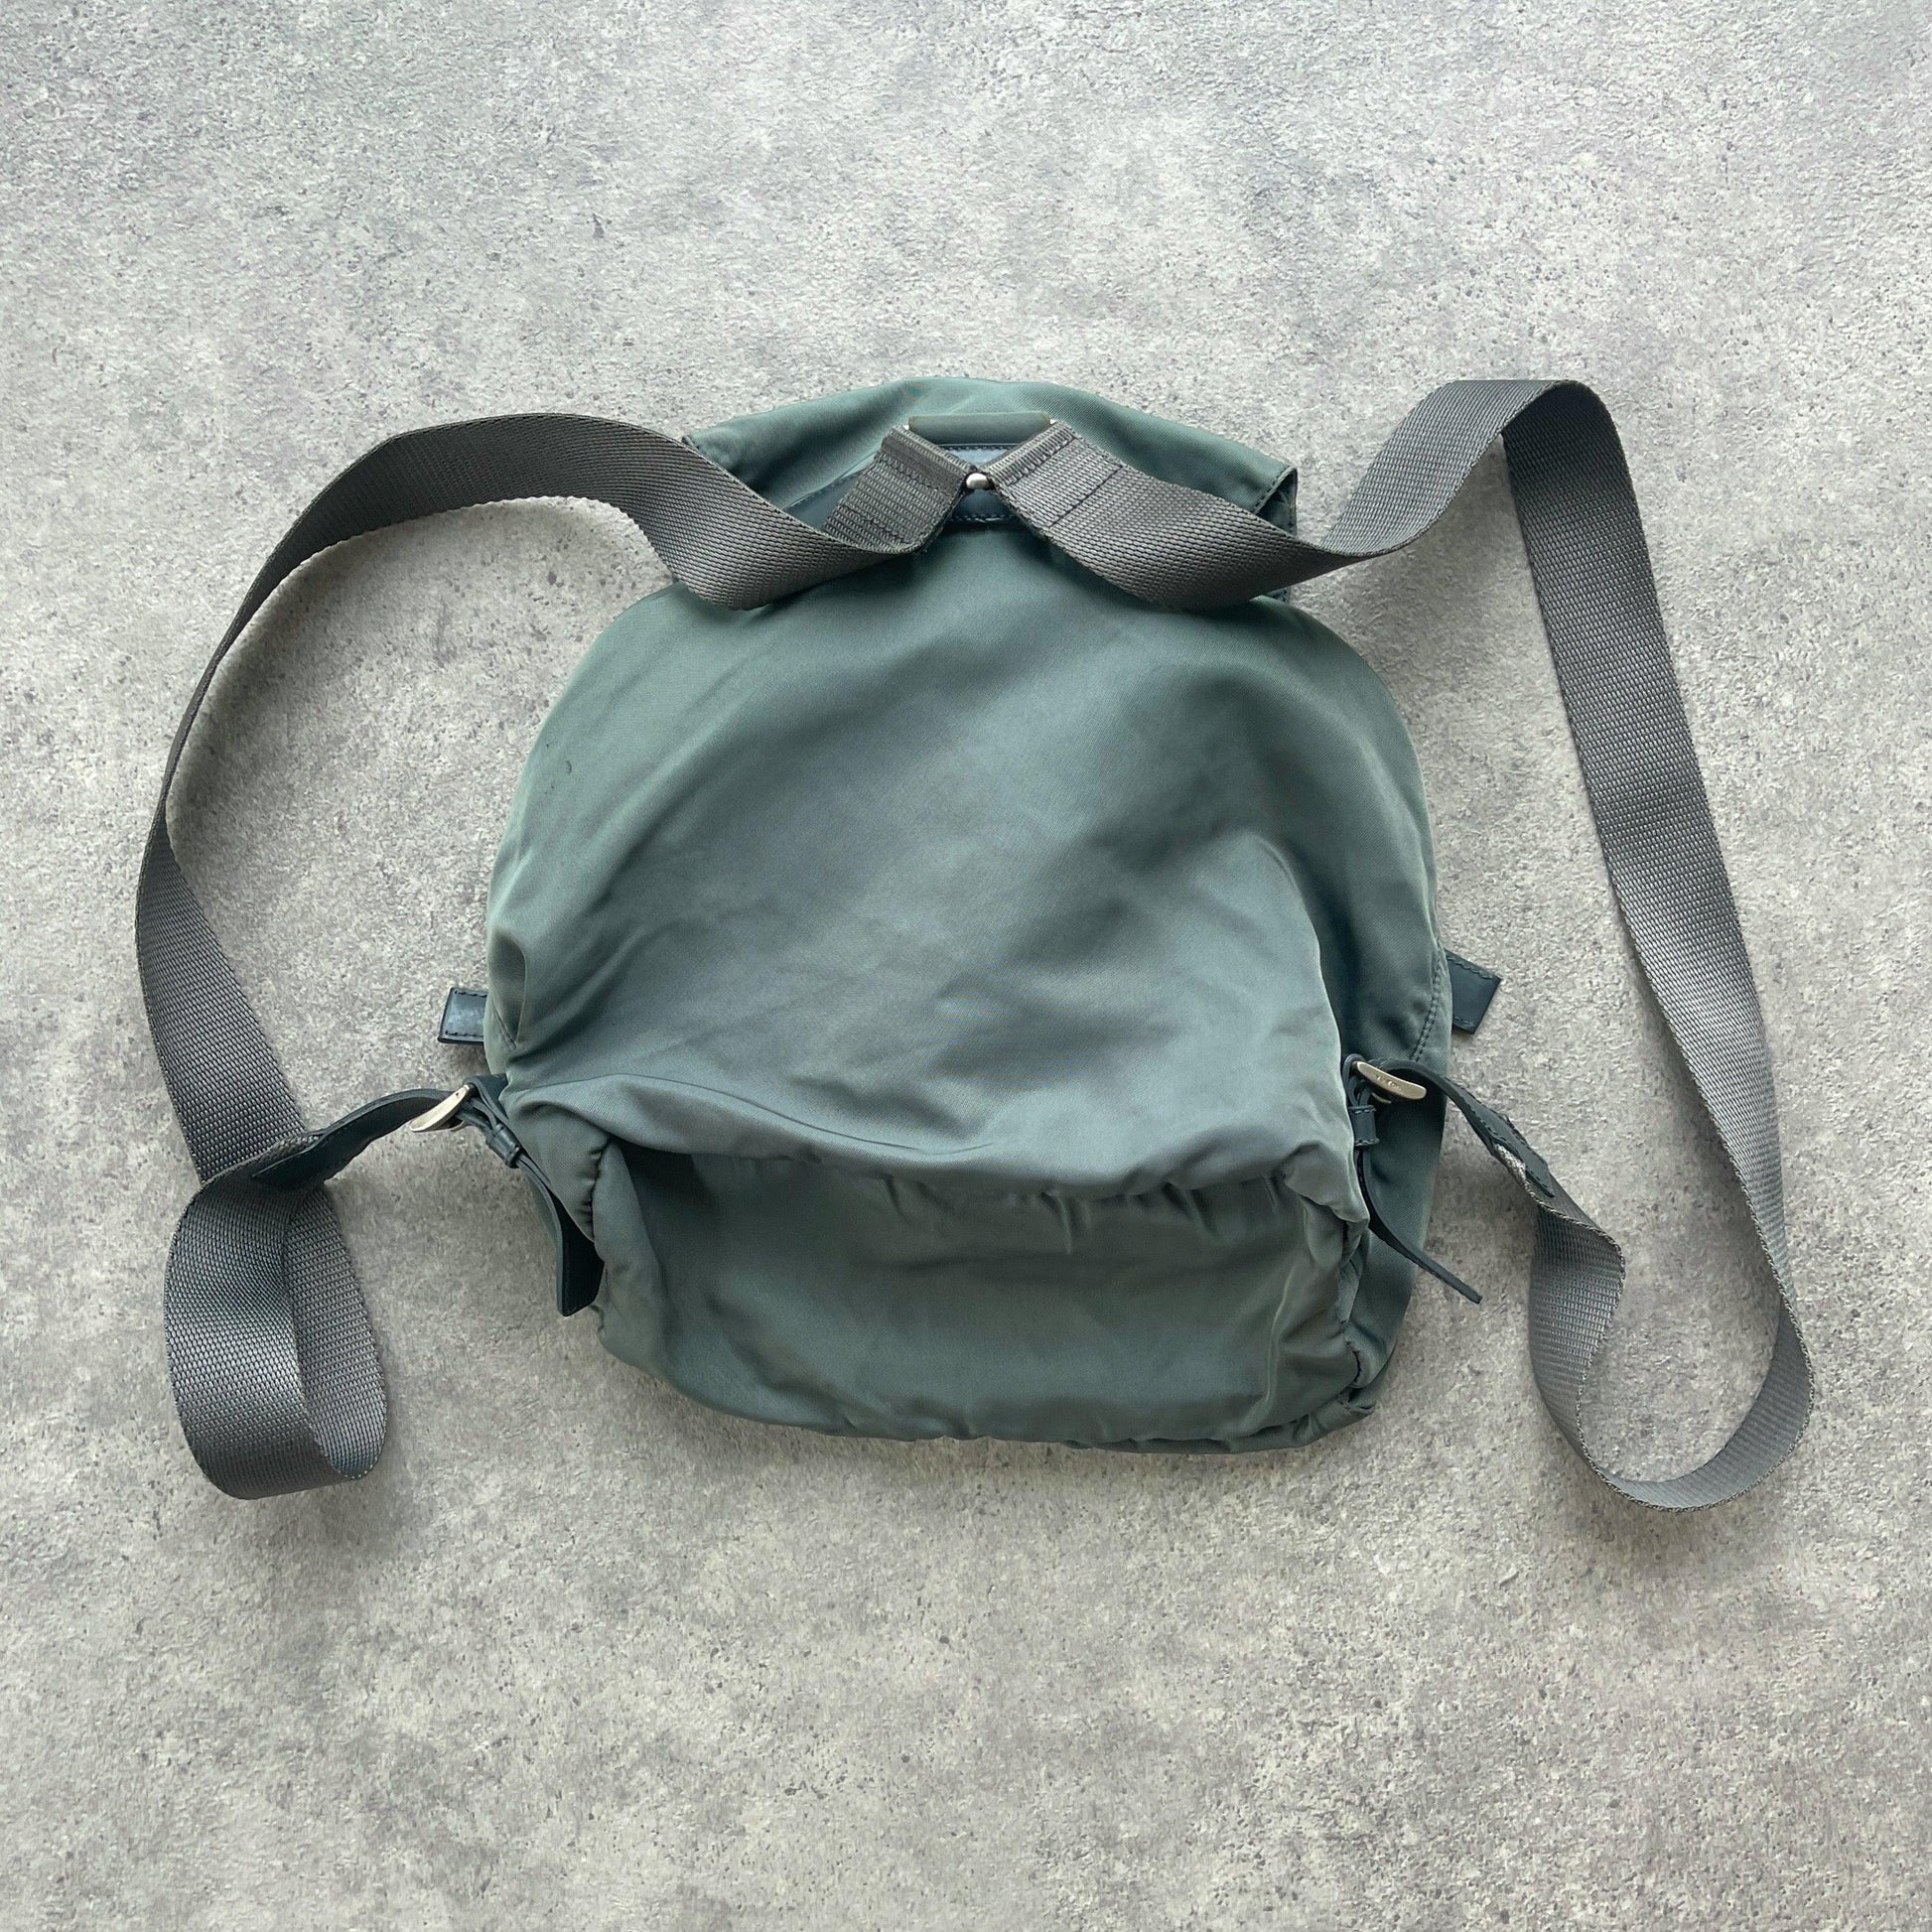 Prada Milano 2000s nylon mini backpack (12”x11”x5”) - Known Source